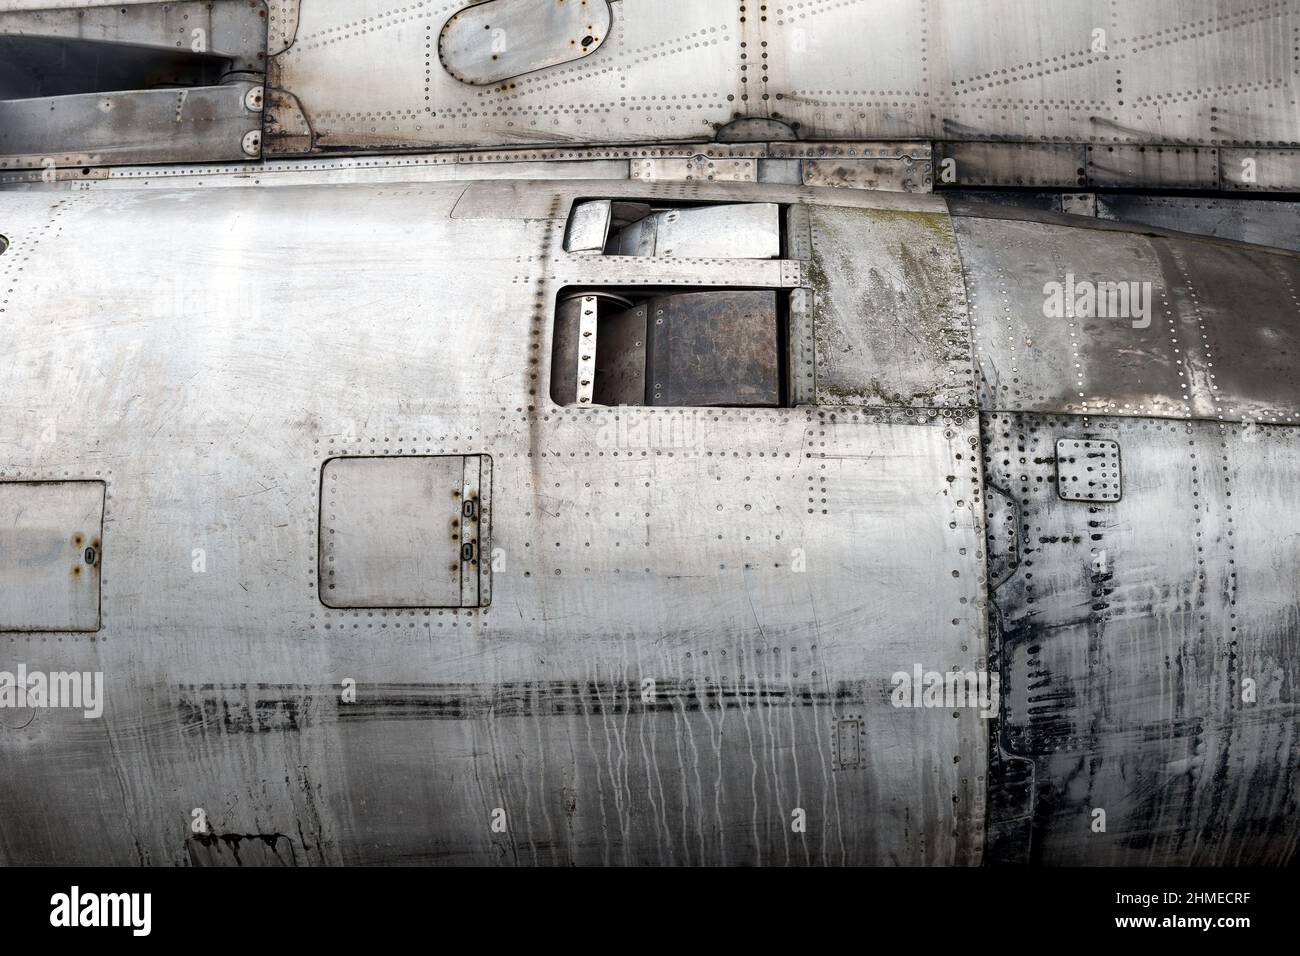 full framed side view of a old rusty metallic big jet plane turbine reactor Stock Photo